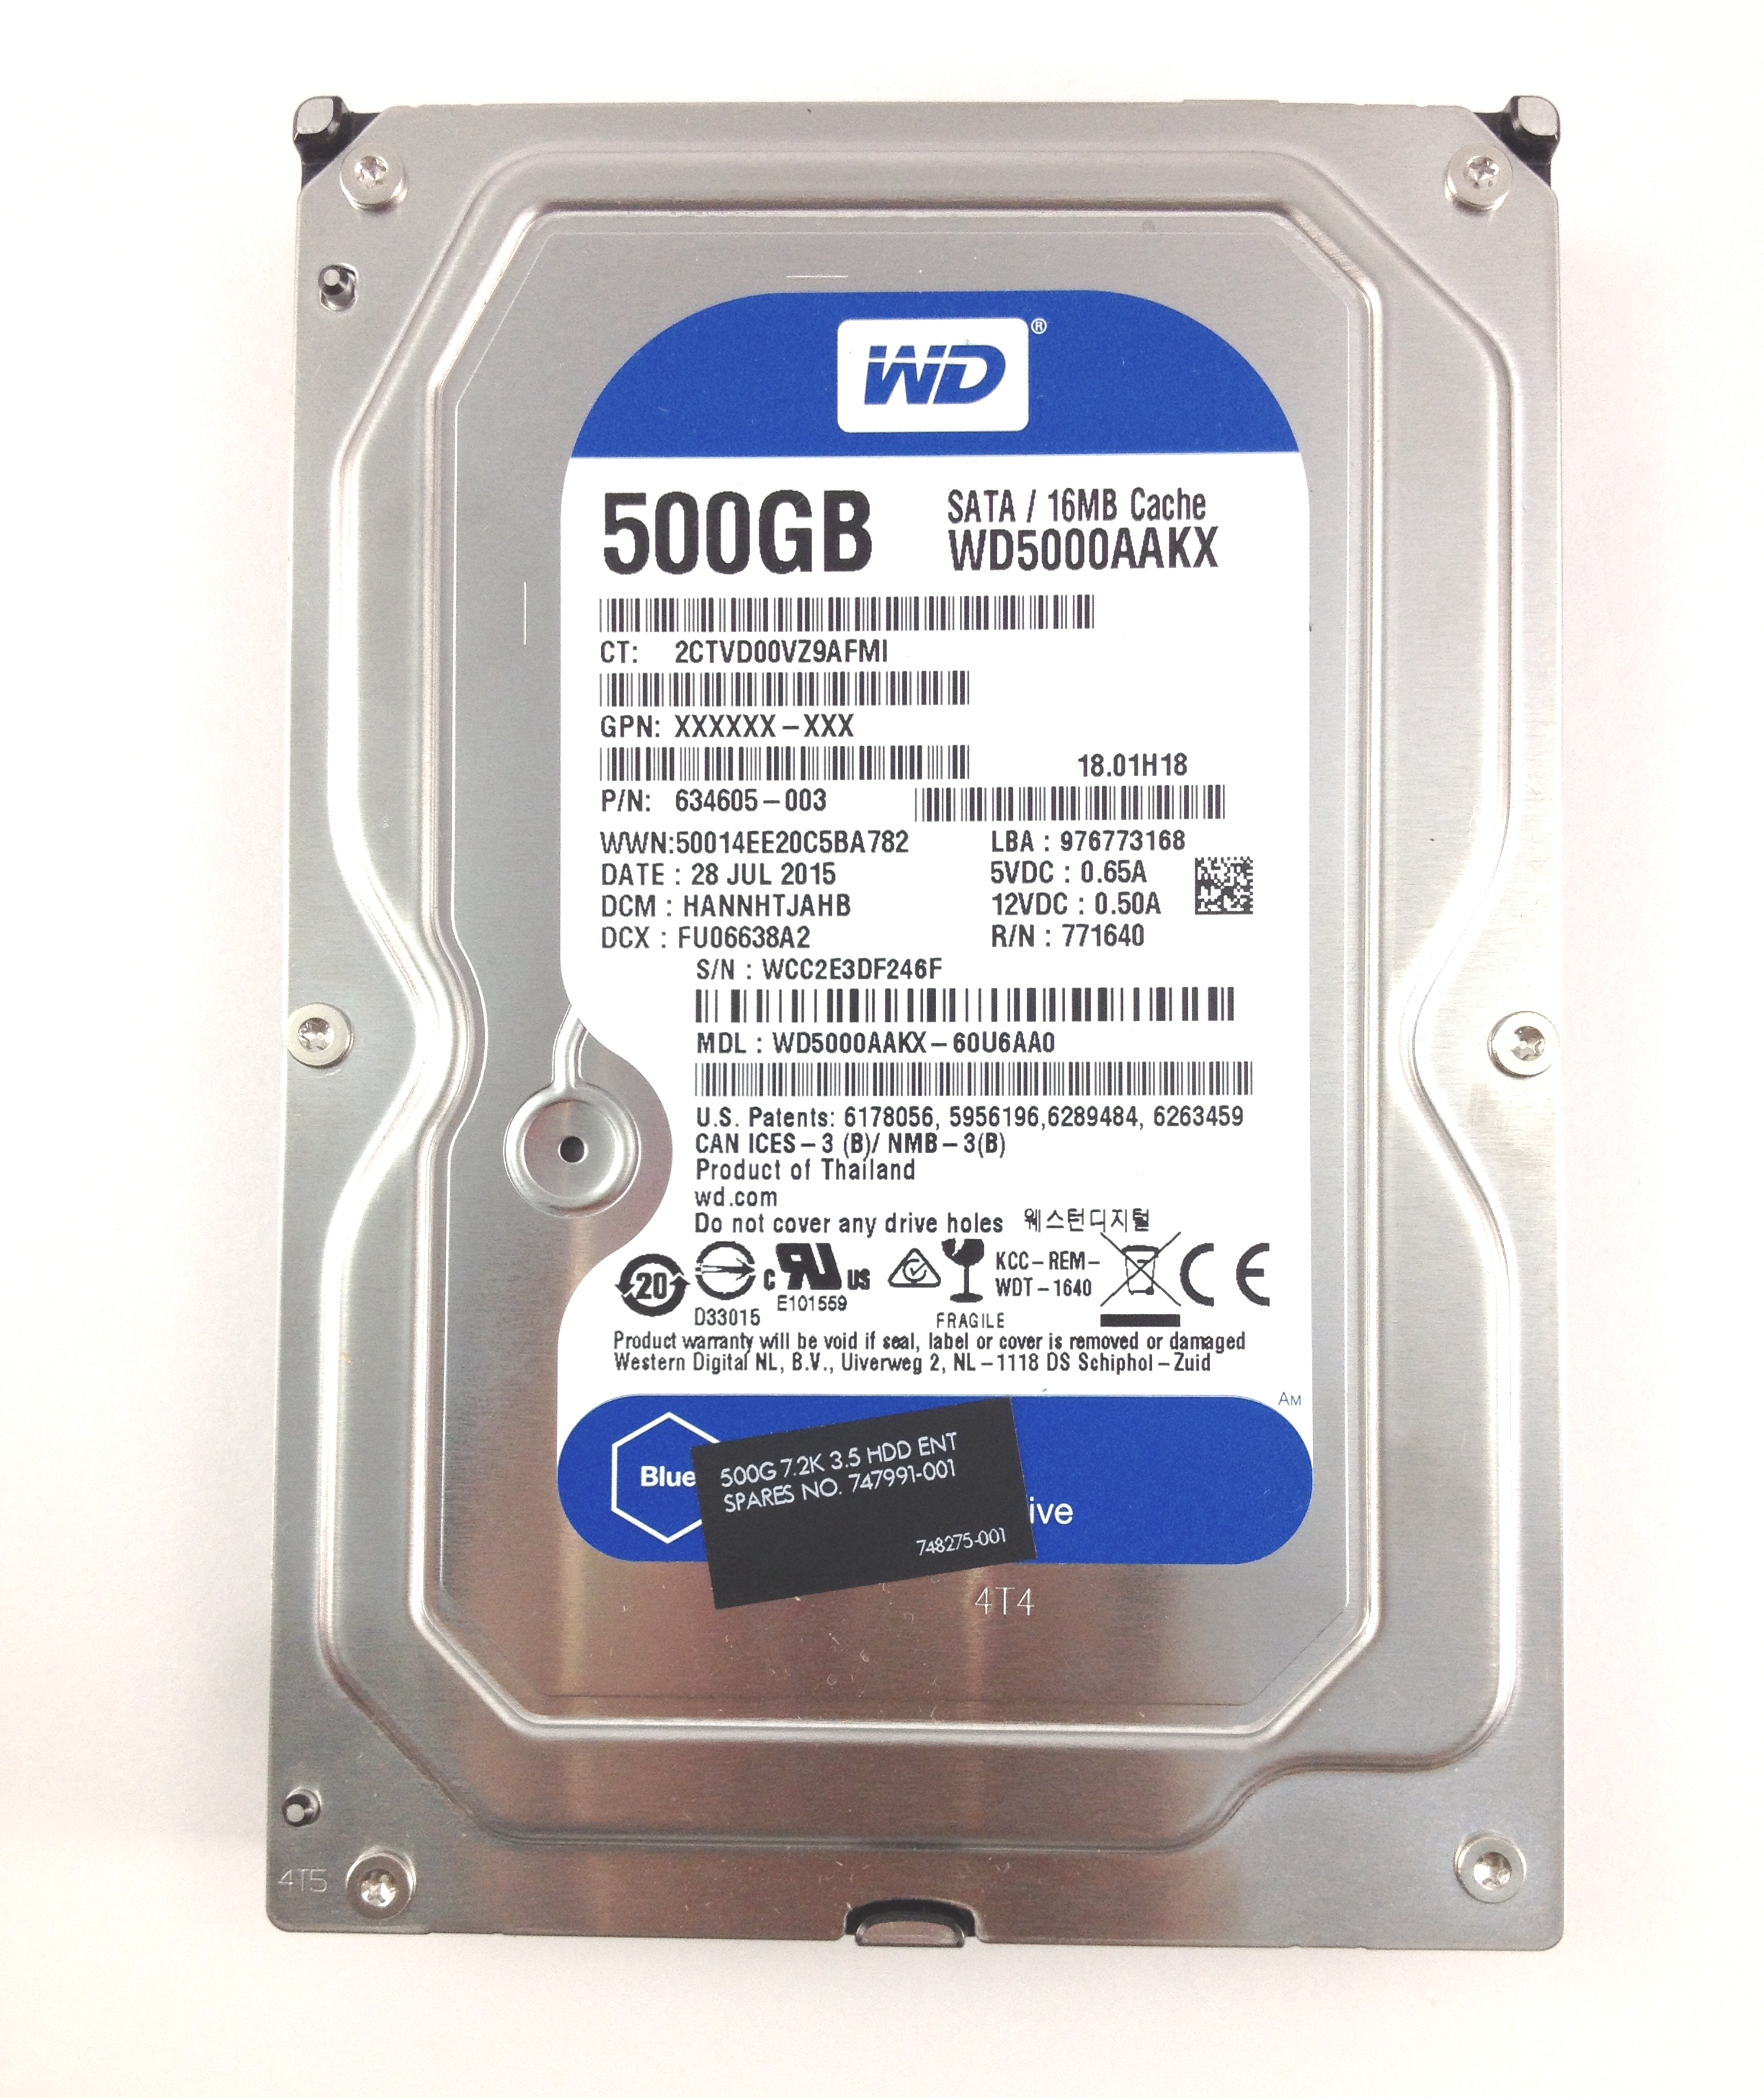 HP 500GB SATA 3GB/S HARD DRIVE - 7200 RPM 3.5-IN FF (747991-001)